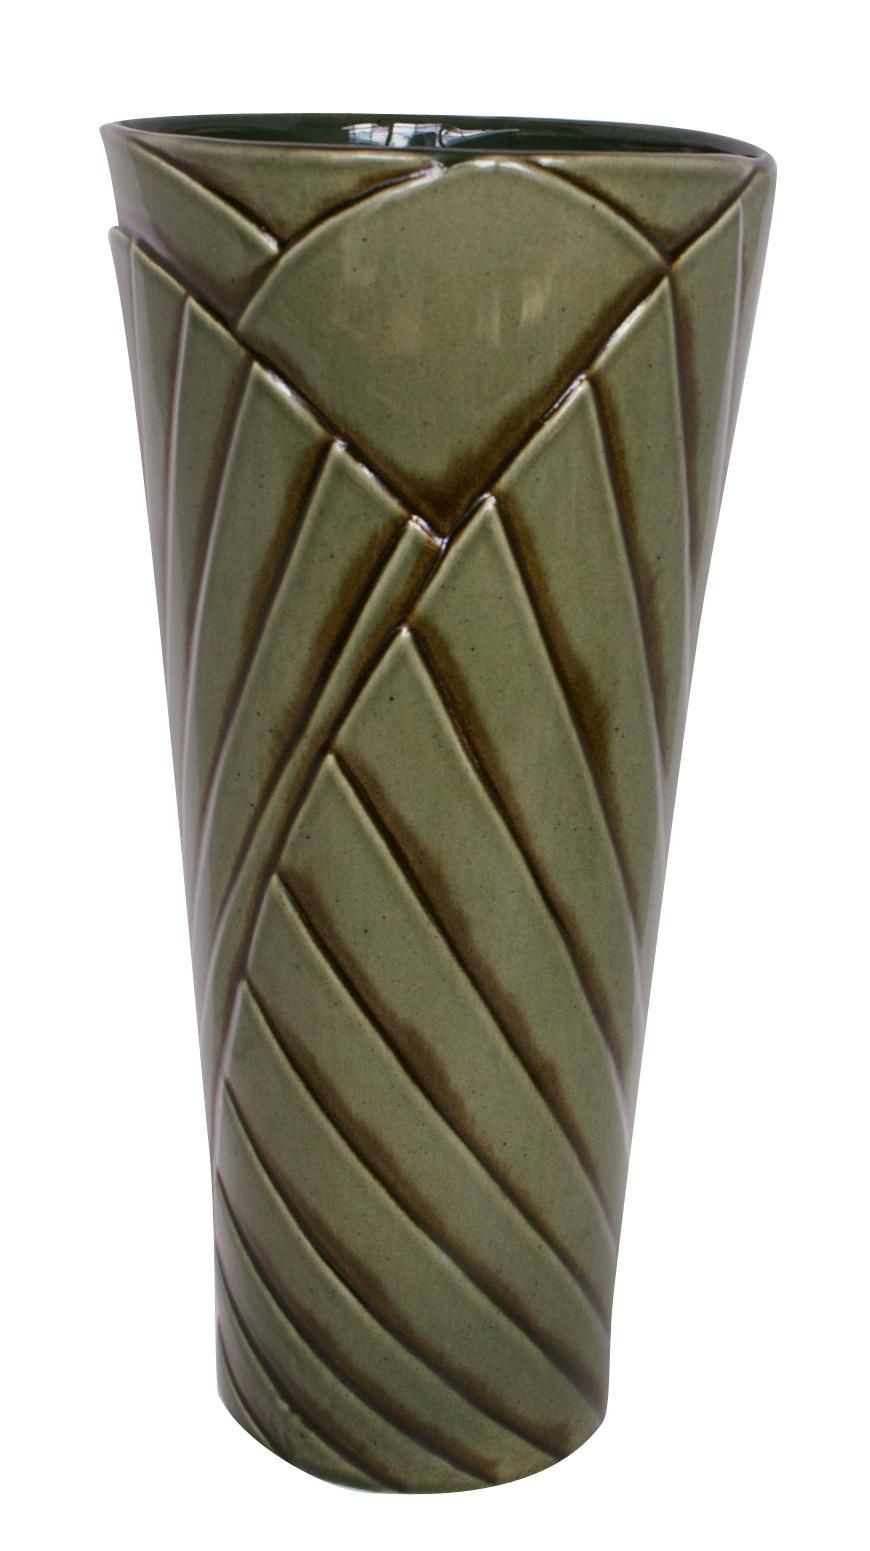 10 Recommended Royal Haeger Usa Vase 2024 free download royal haeger usa vase of haeger potteries palm grove 20 ceramic vase lampsplus com in haeger potteries palm grove 20 ceramic vase lampsplus com